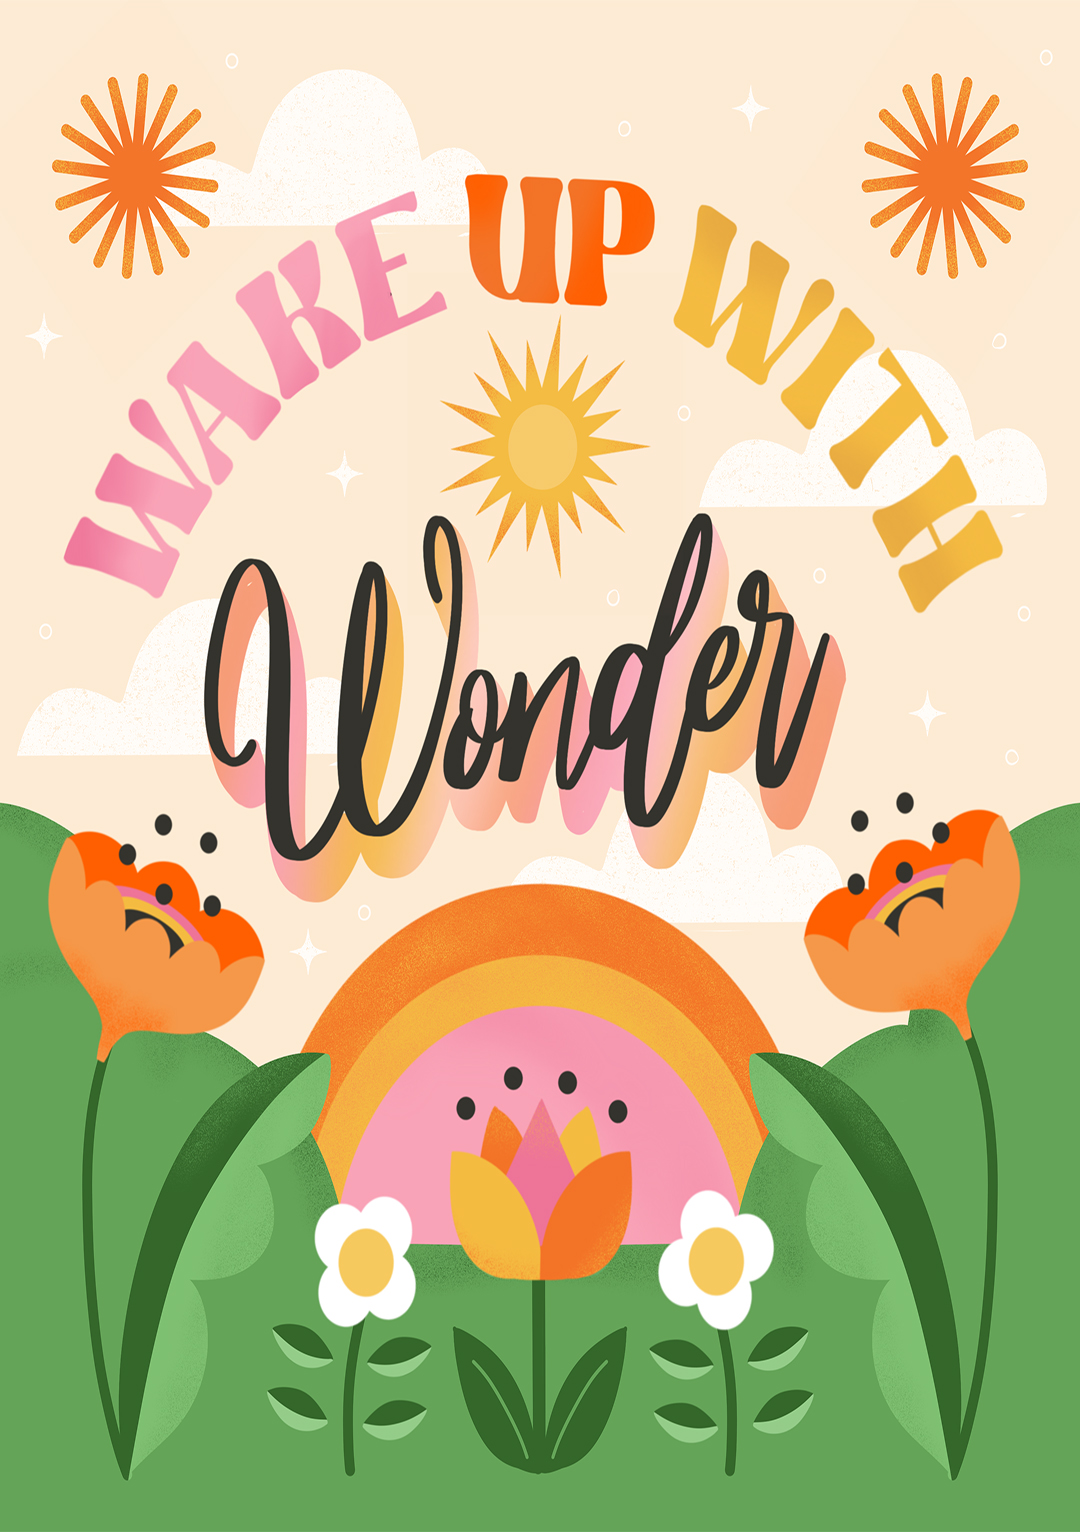 Wake Up With Wonder - Inspirational Greeting Card